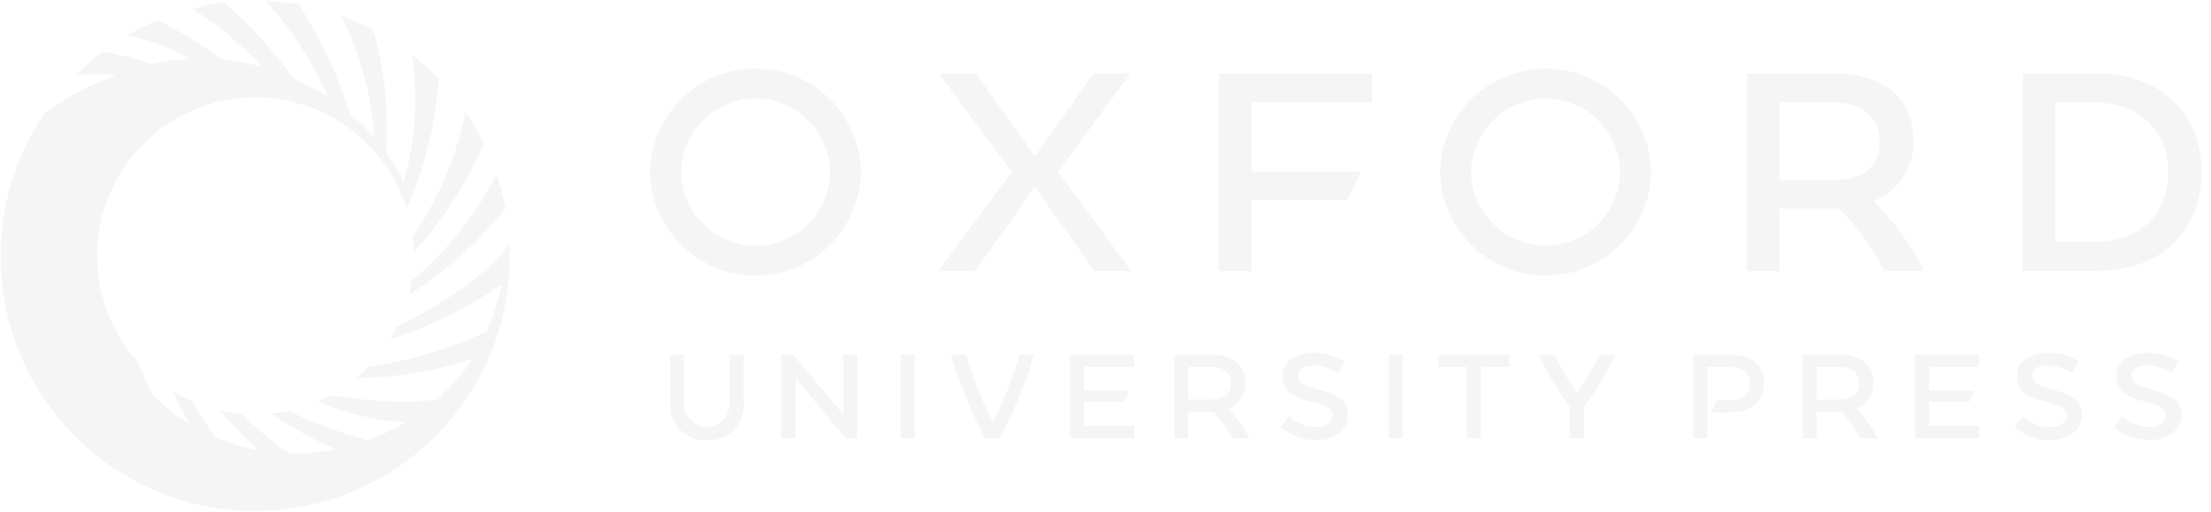 Oxford_University_Press_logo 1